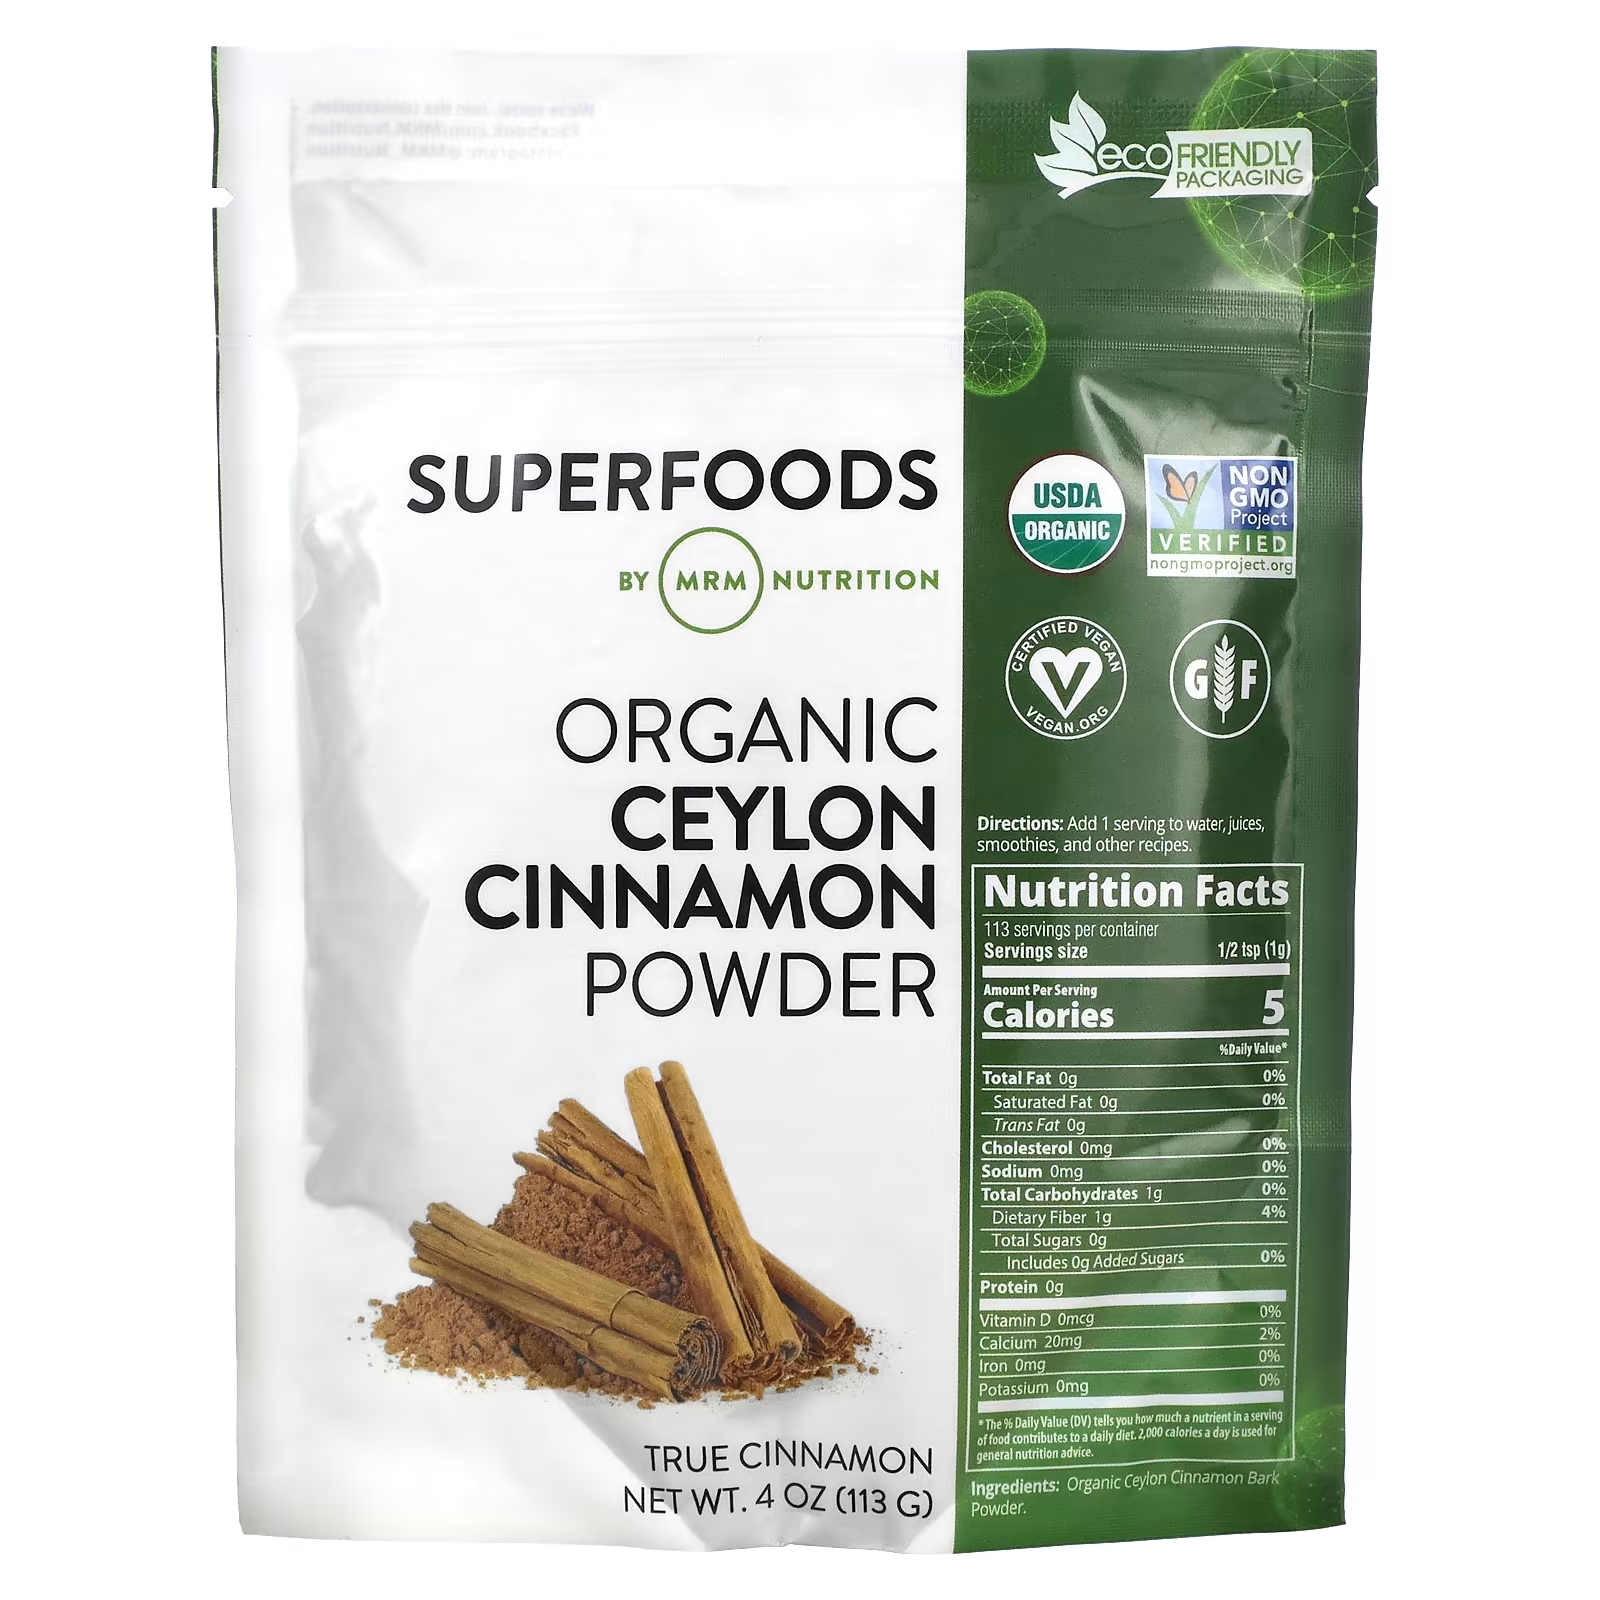 MRM Nutrition Organic Ceylon Cinnamon Powder, 113 г mrm nutrition organic ceylon cinnamon powder 113 г